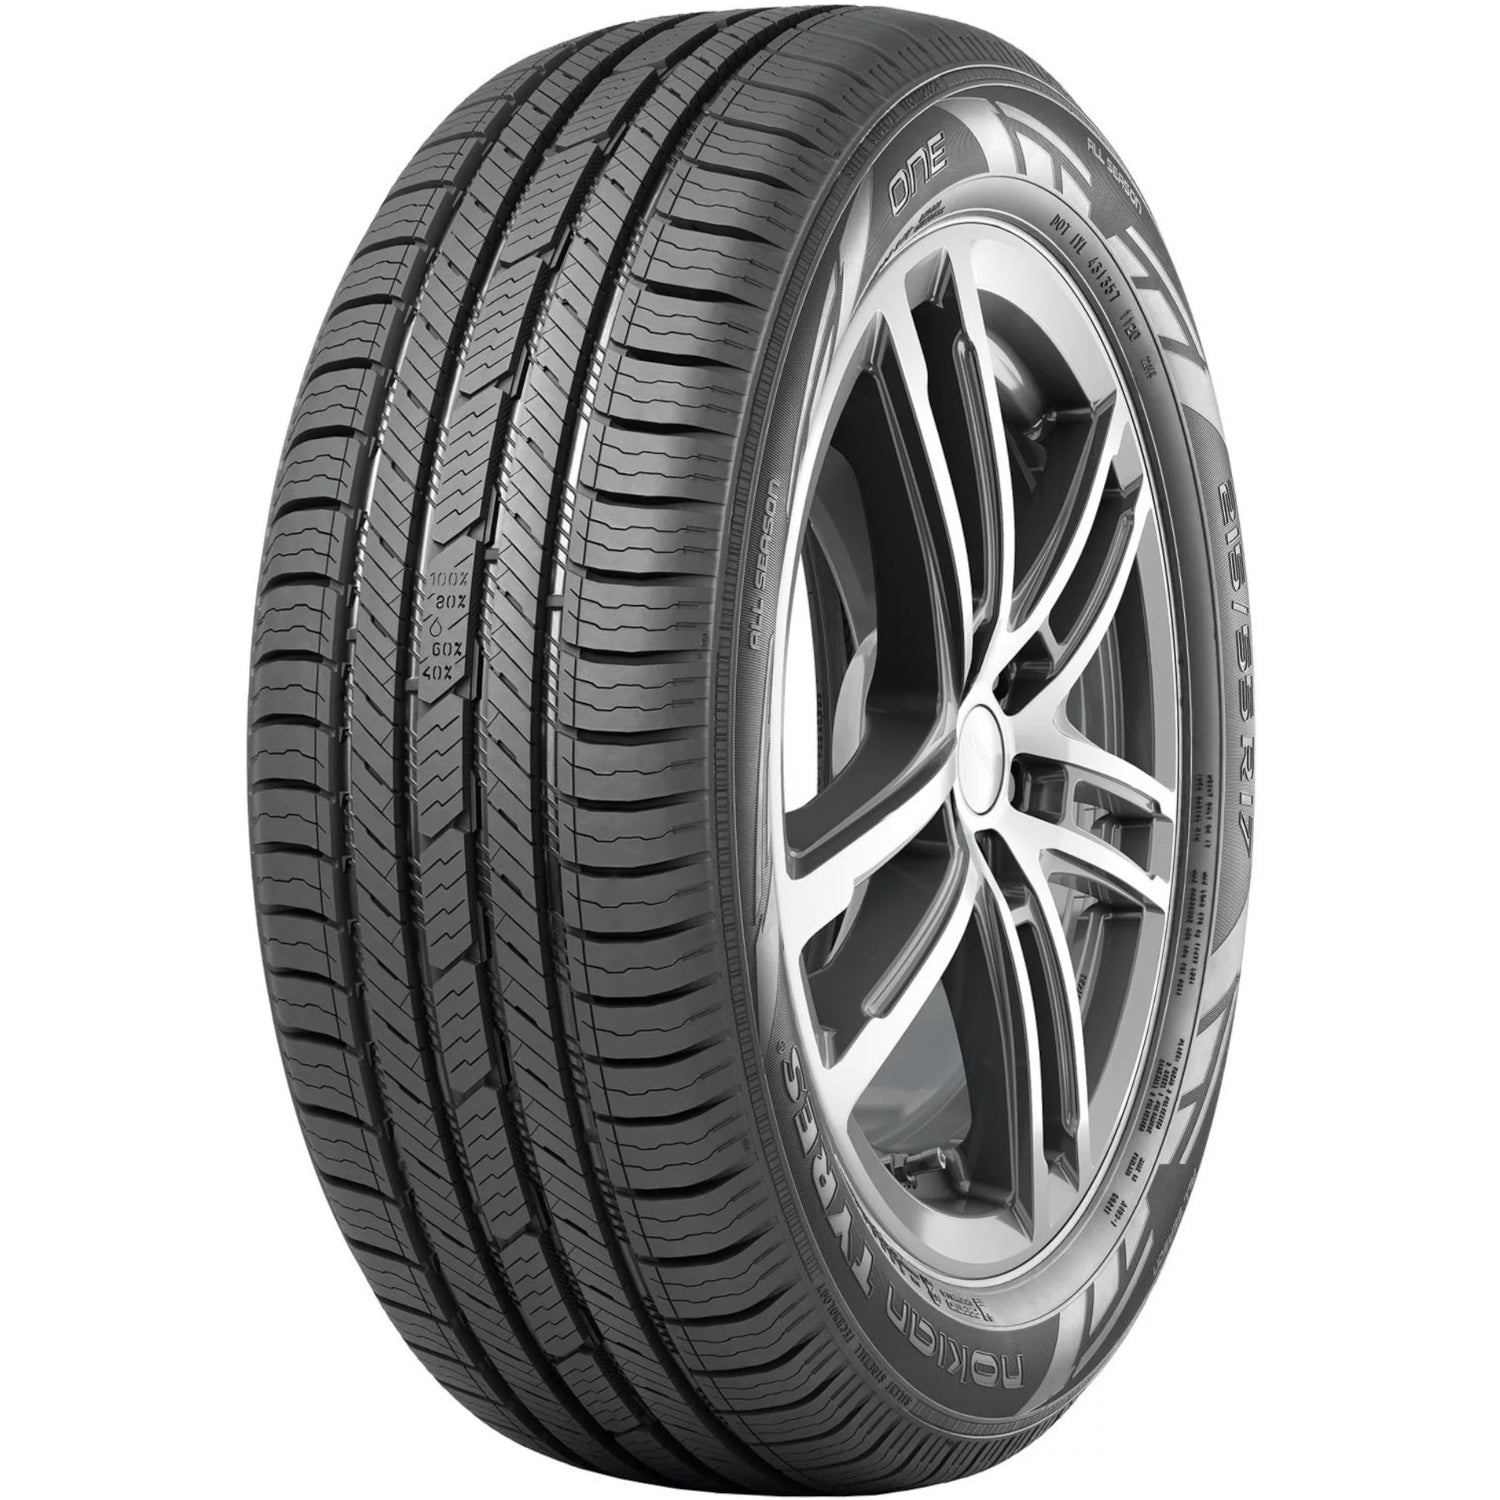 NOKIAN ONE 205/70R15 (26.3X8.1R 15) Tires